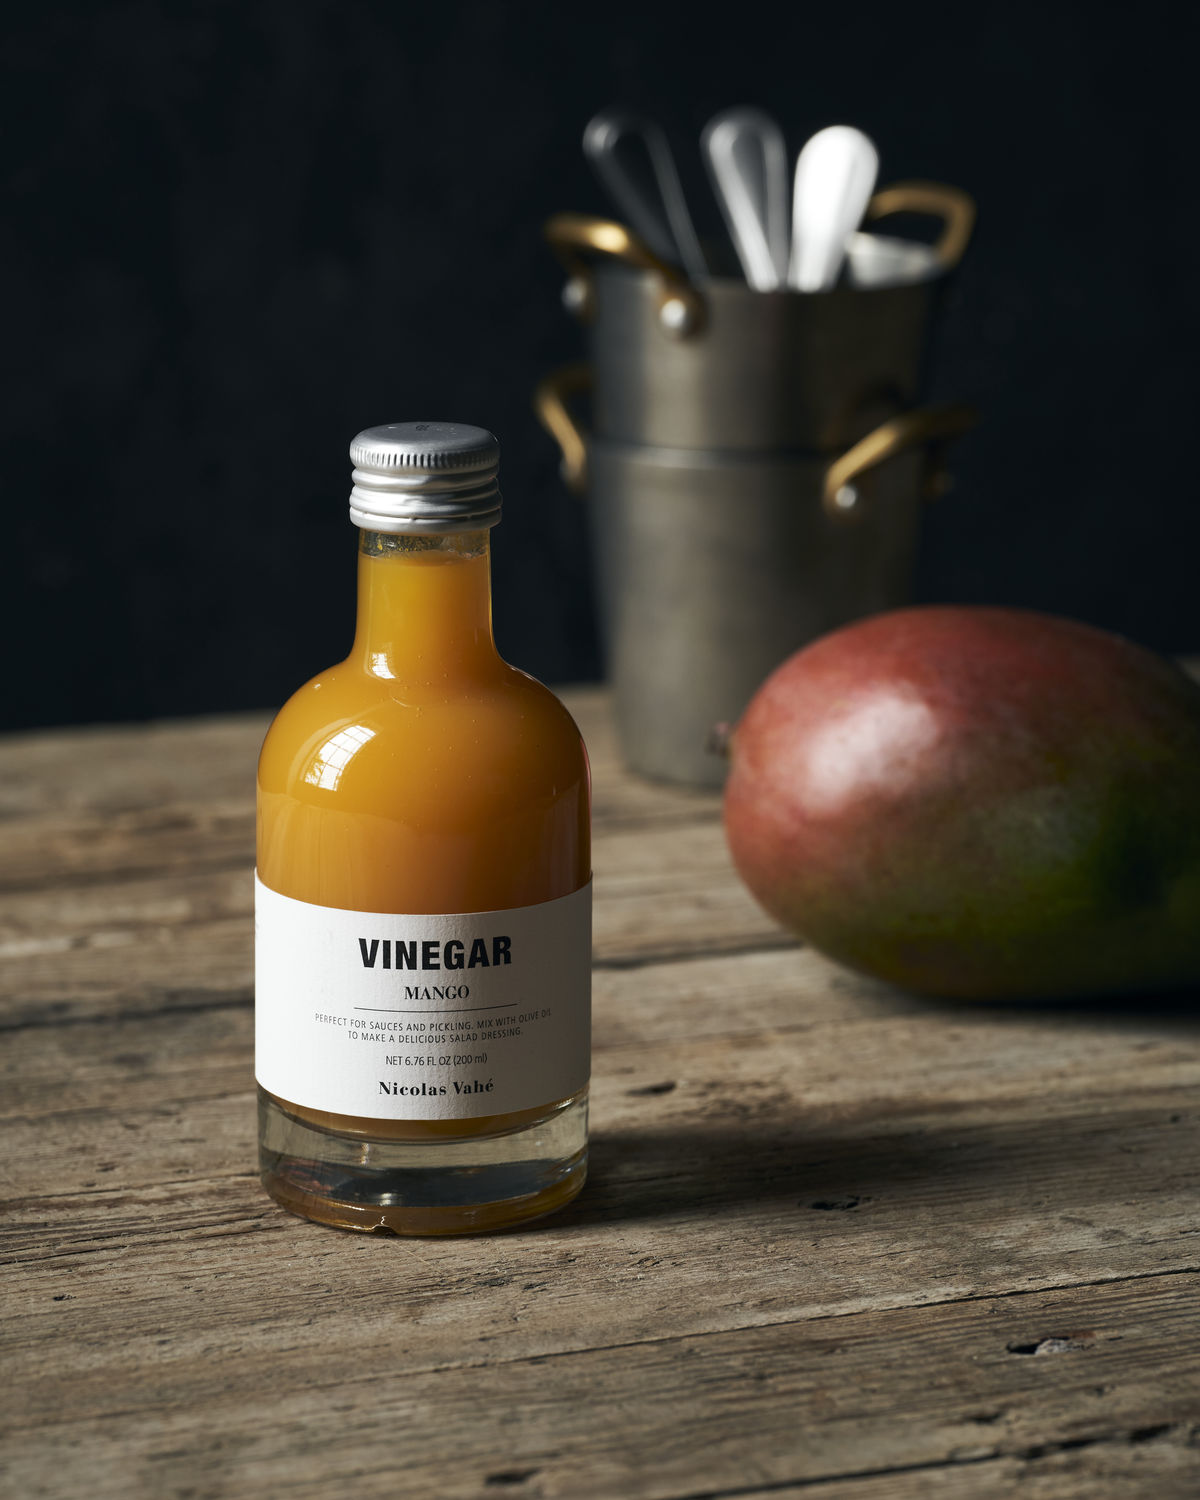 Vinegar, Mango, 200 ml.